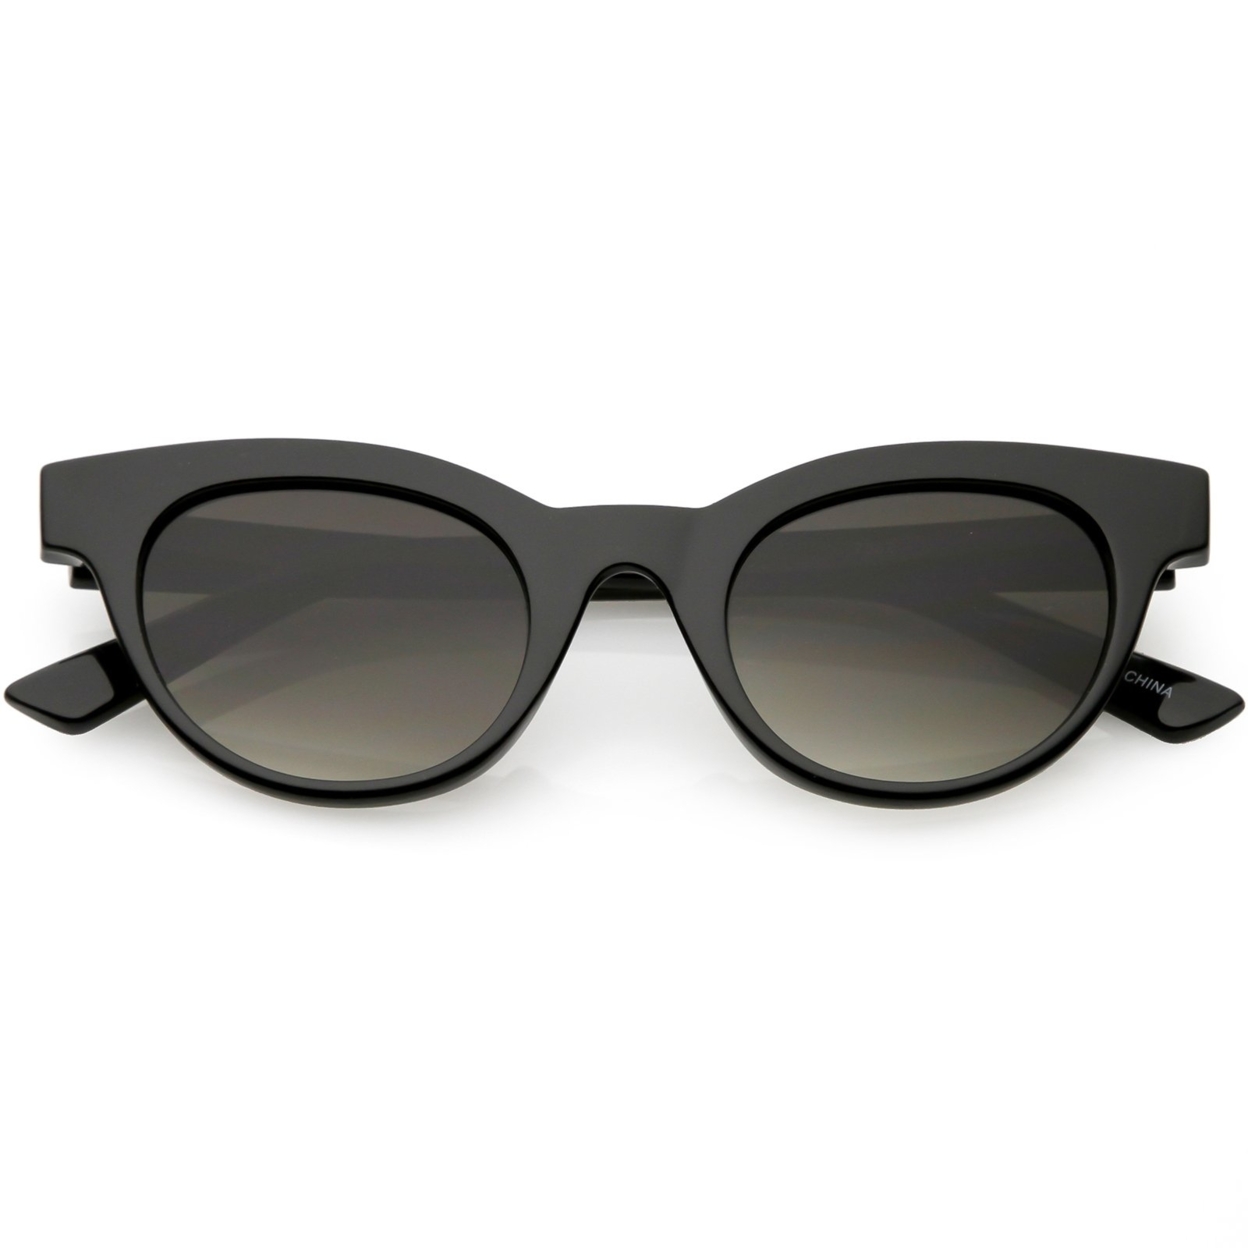 Women's Horn Rimmed Cat Eye Sunglasses Neutral Colored Round Lens Cat Eye Sunglasses 47mm - Matte Smoke / Smoke